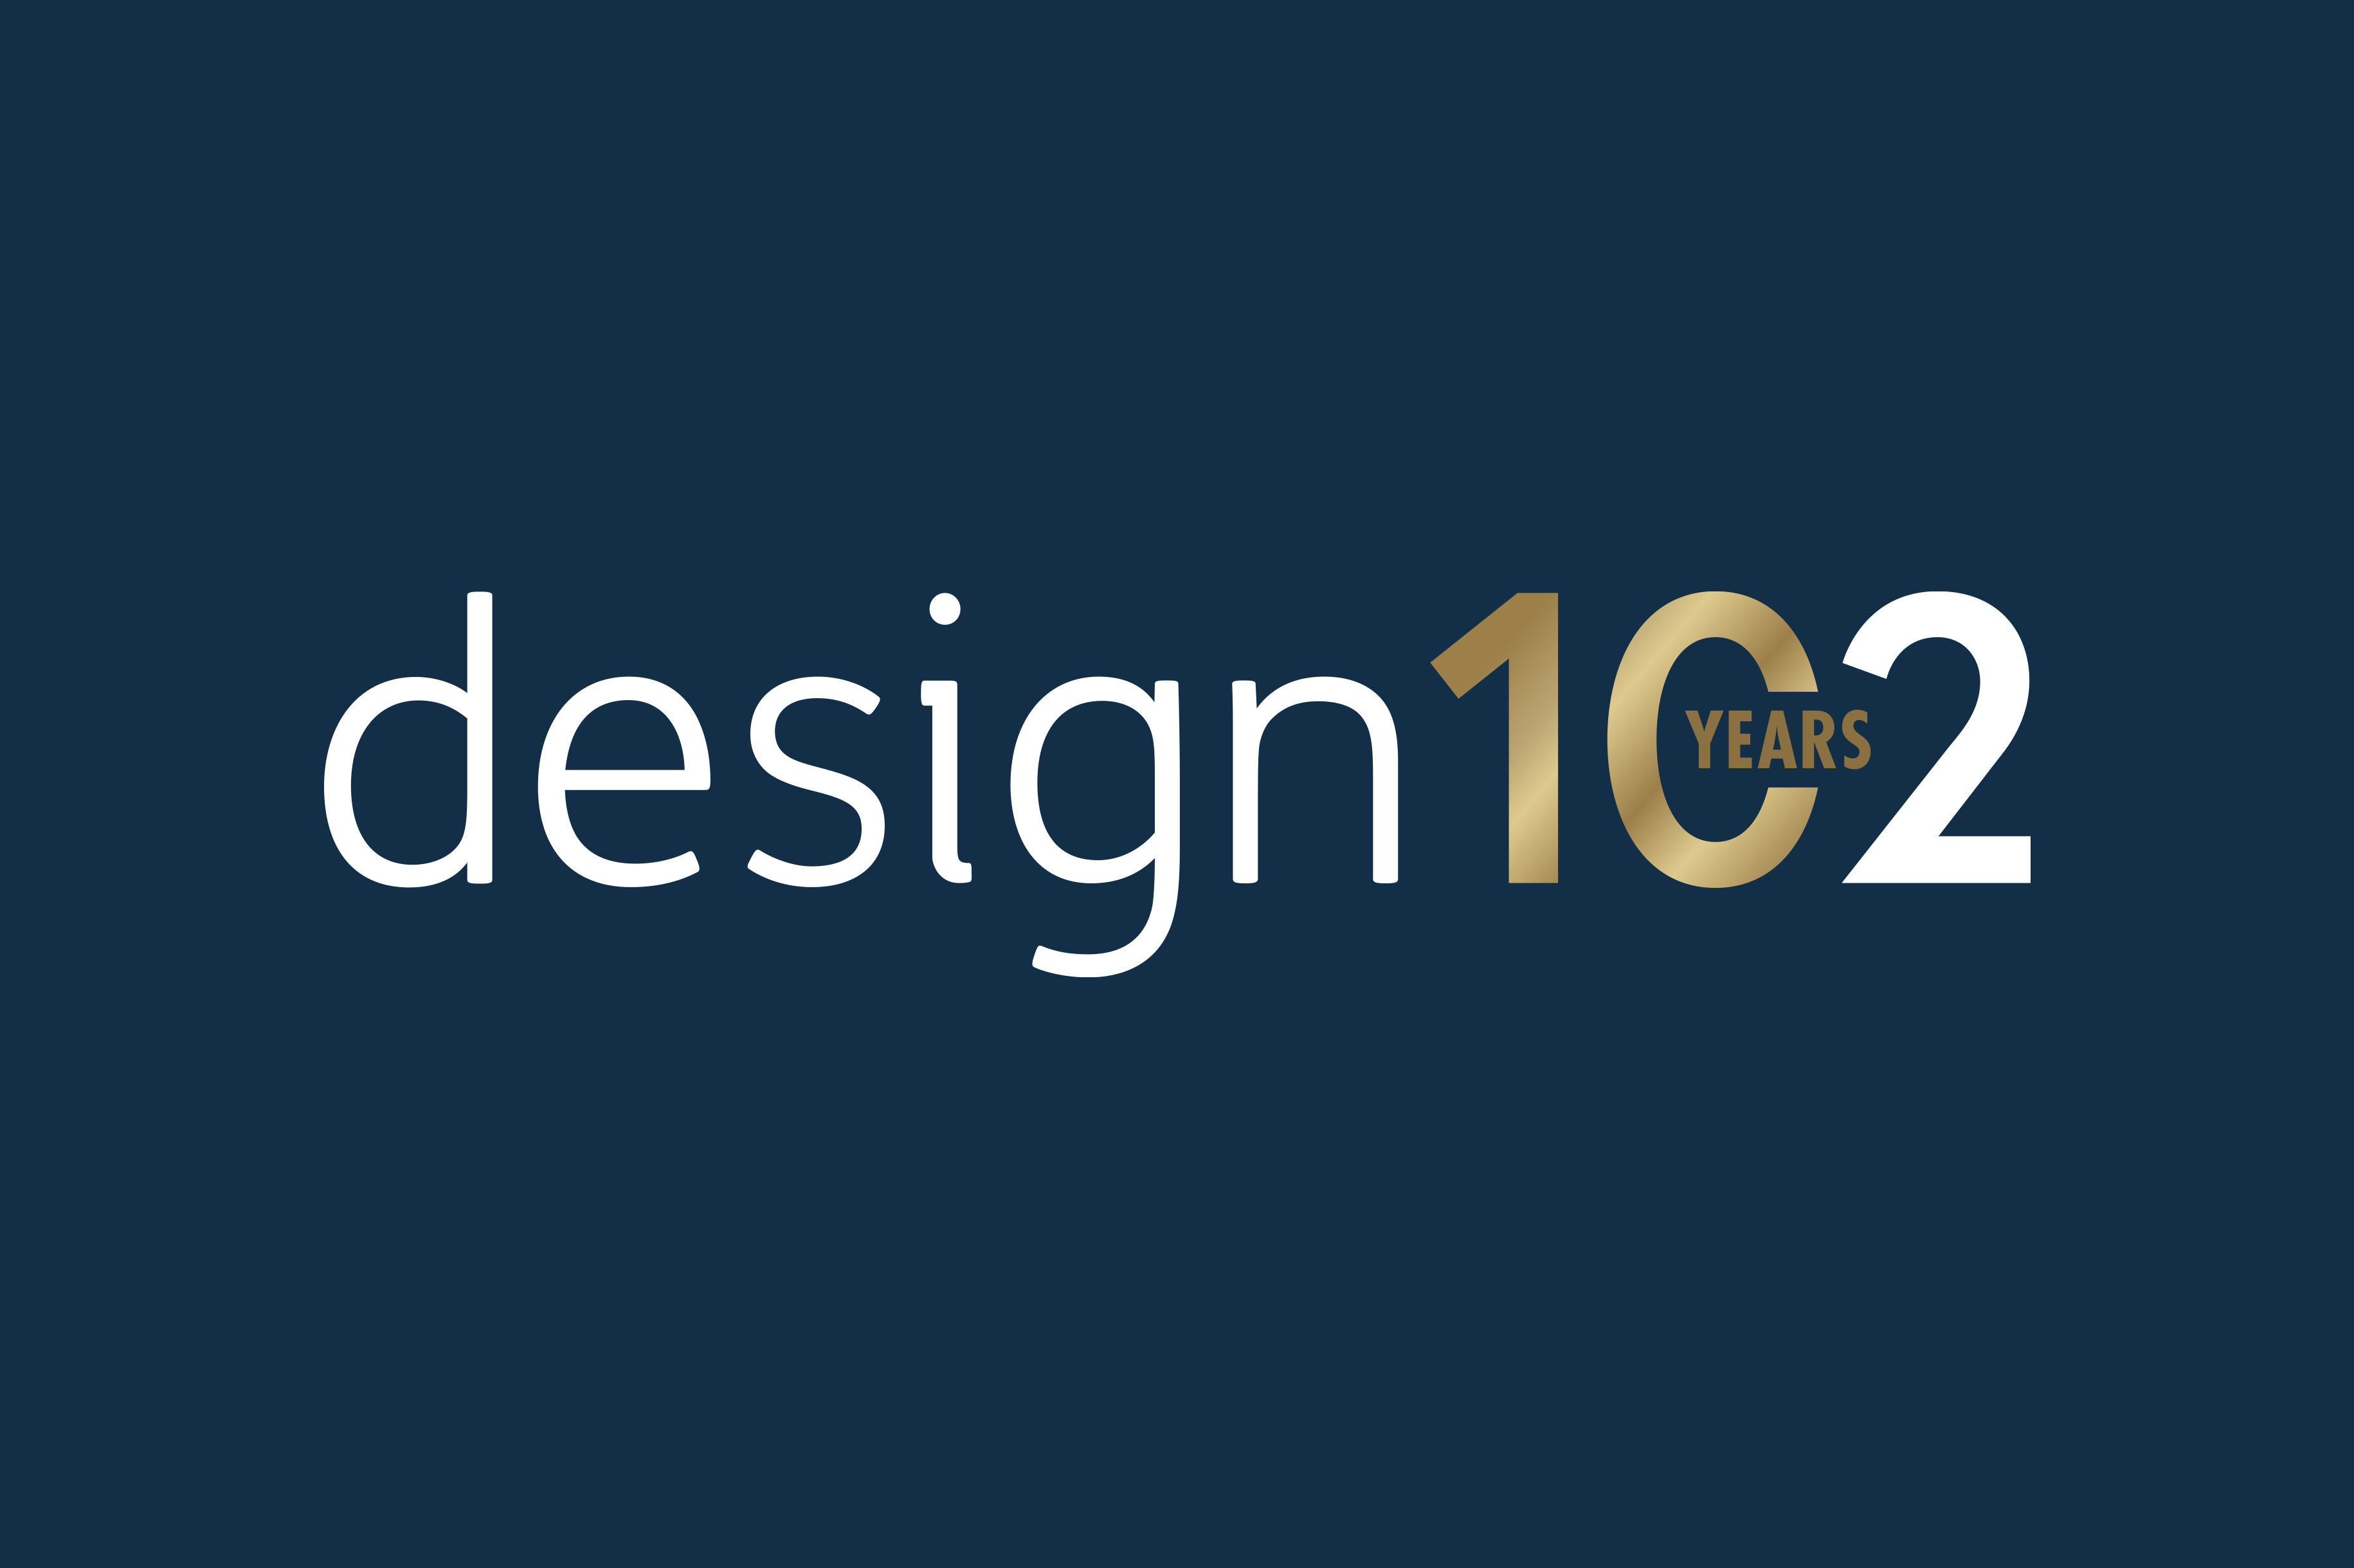 10 years of Design102 logo